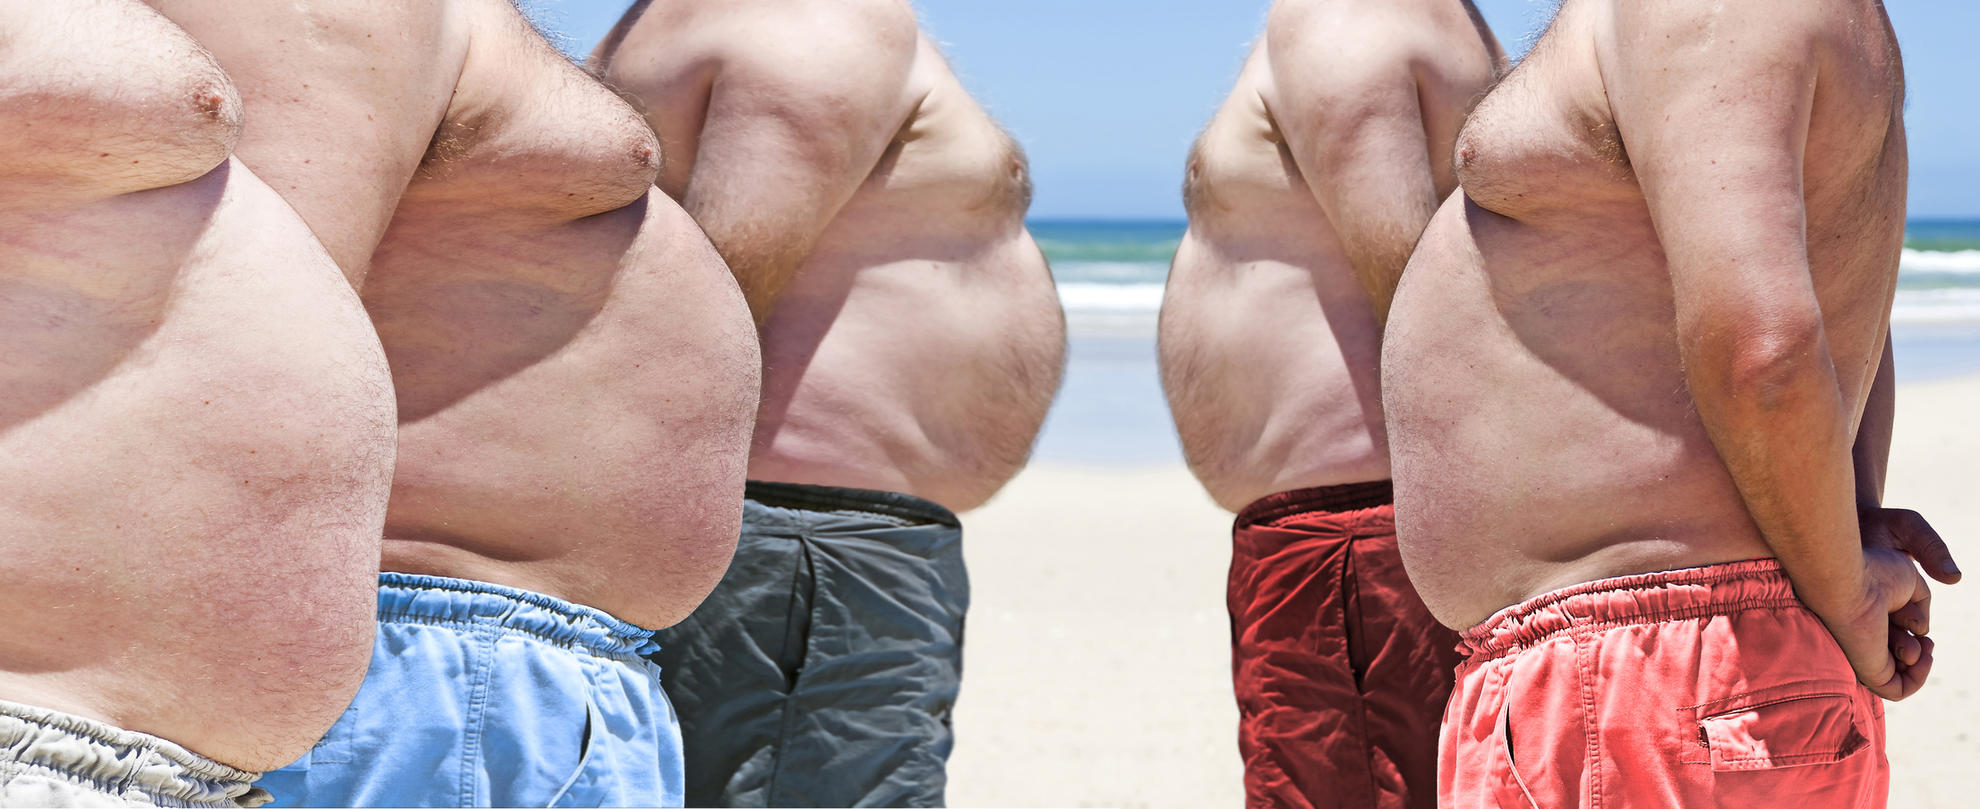 грудь у мужчин при ожирении фото 71